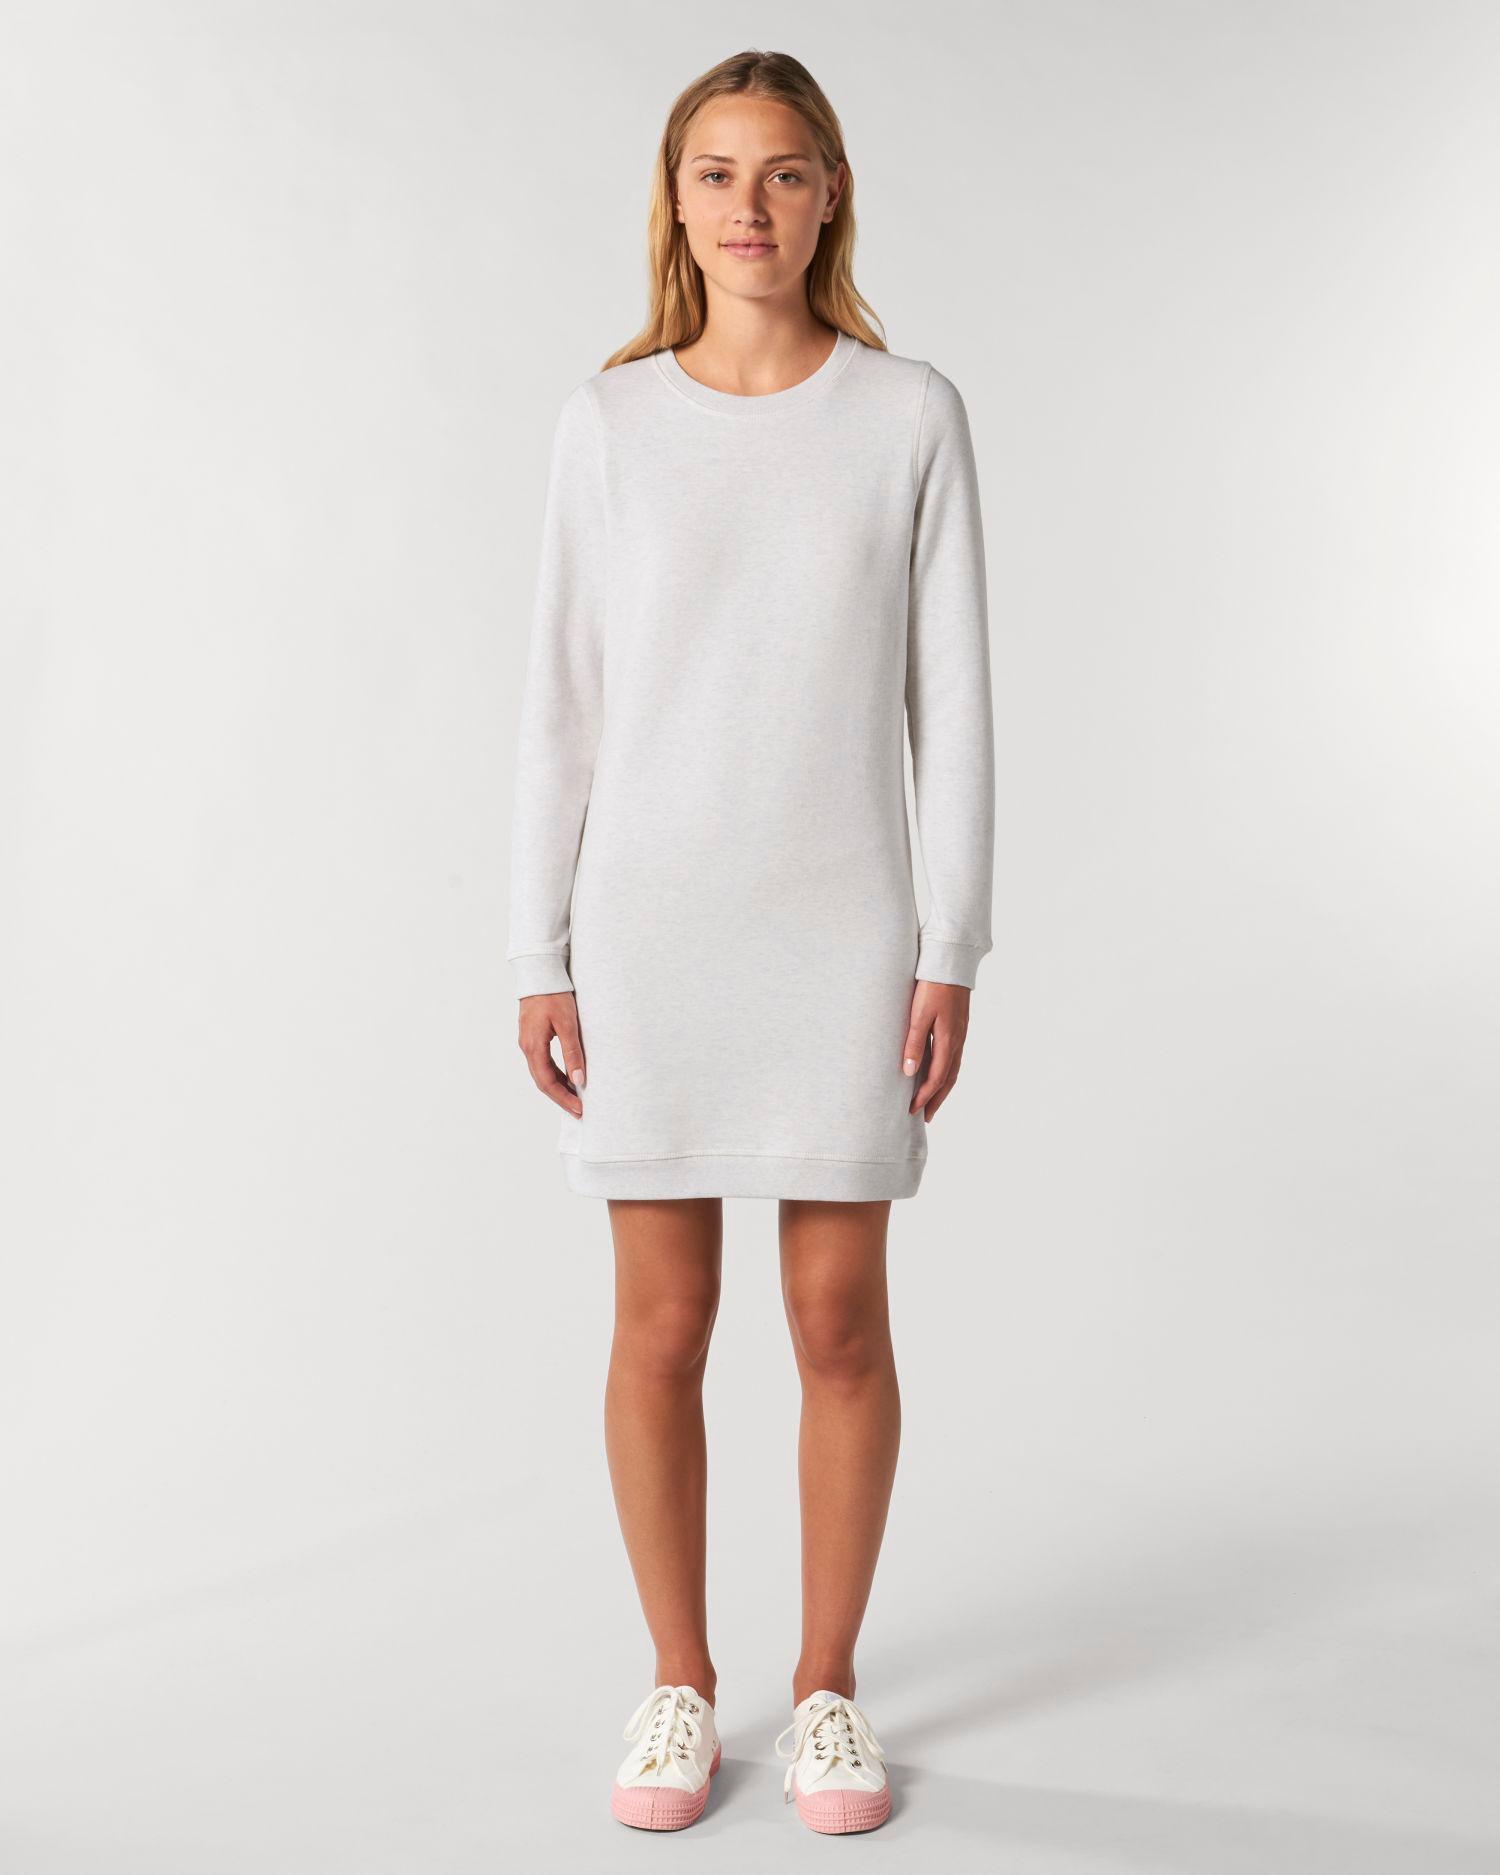 Stella Kicks Round Neck Sweatshirt Dress With Embroidery Or Digital Printing Cream Heather Grey